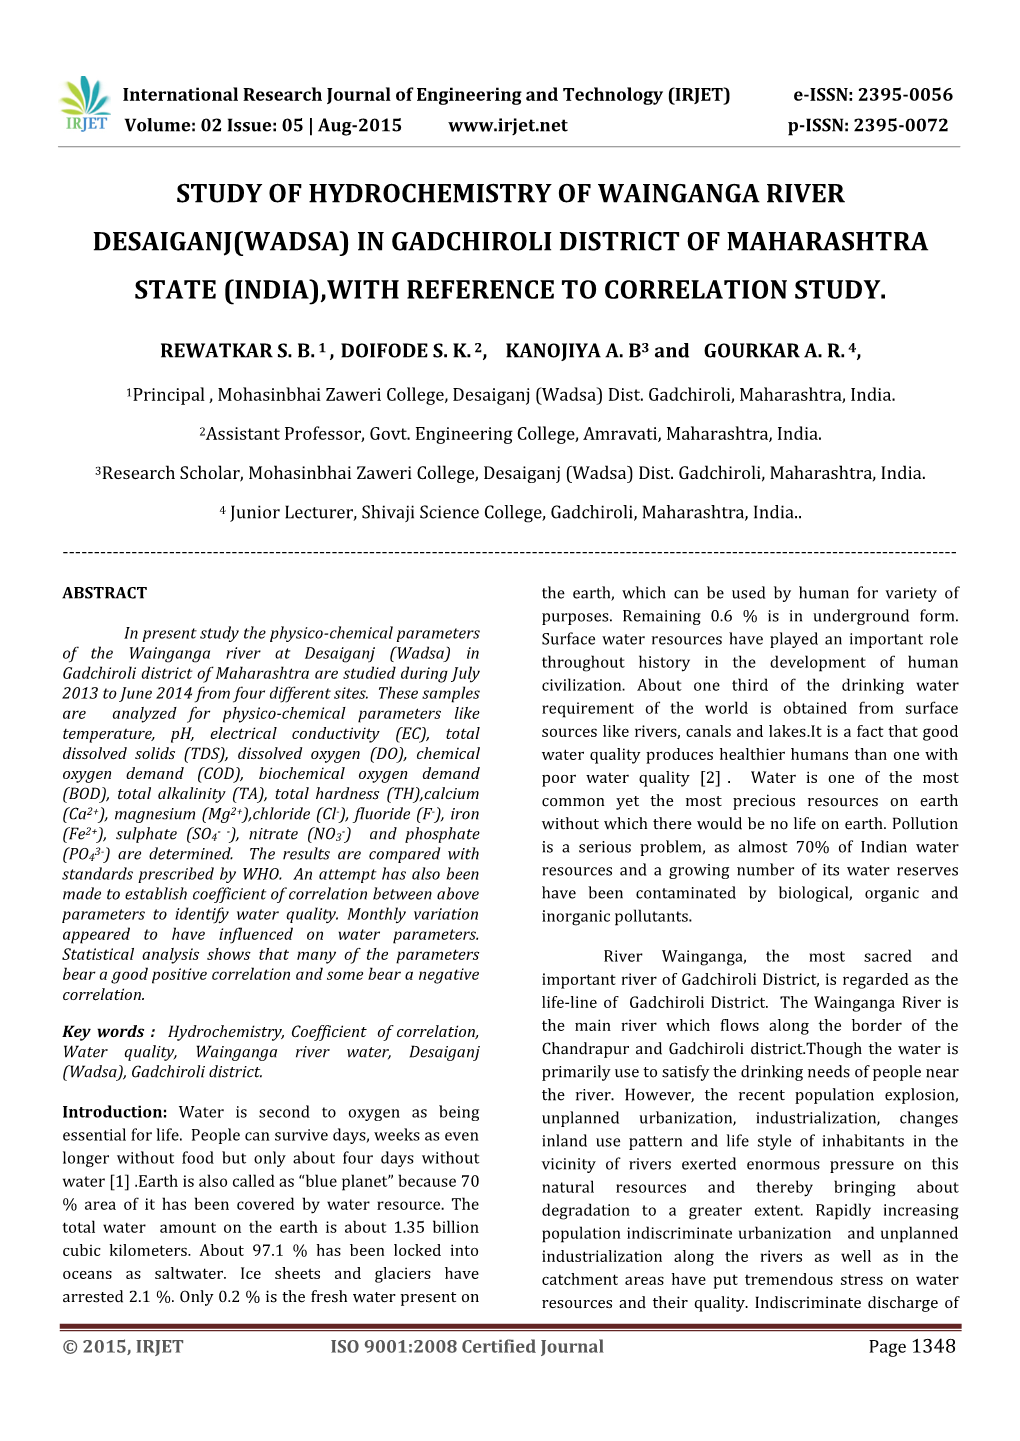 Study of Hydrochemistry of Wainganga River Desaiganj(Wadsa) in Gadchiroli District of Maharashtra State (India),With Reference to Correlation Study